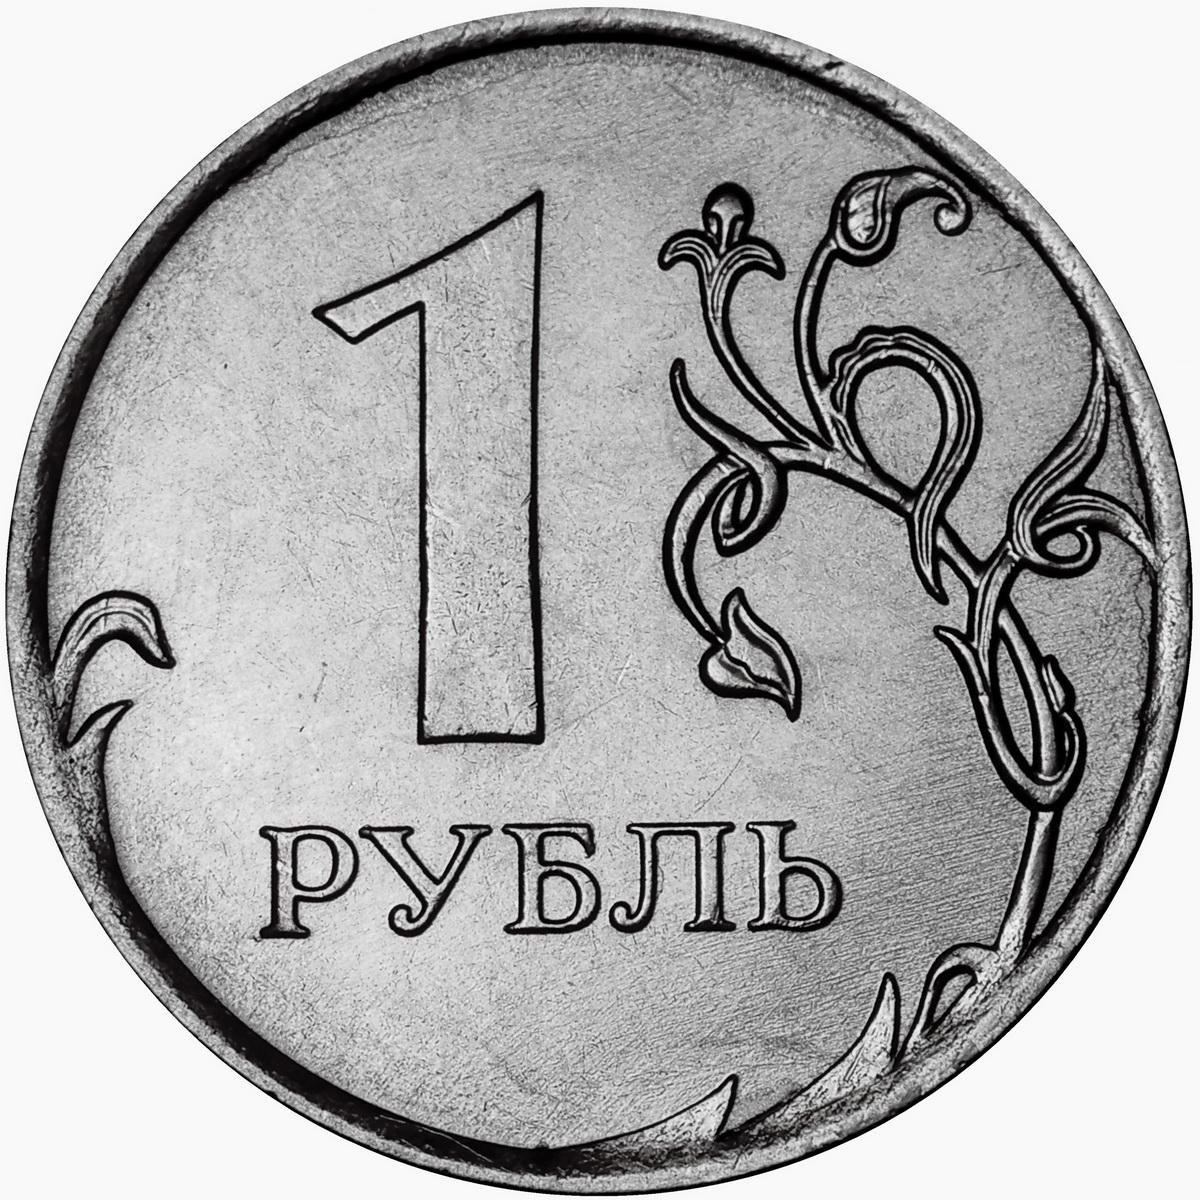 Рублей без 1 рубля. 1 Рубль. 1rubli. Номинал 1 рубль. Изображение рубля.